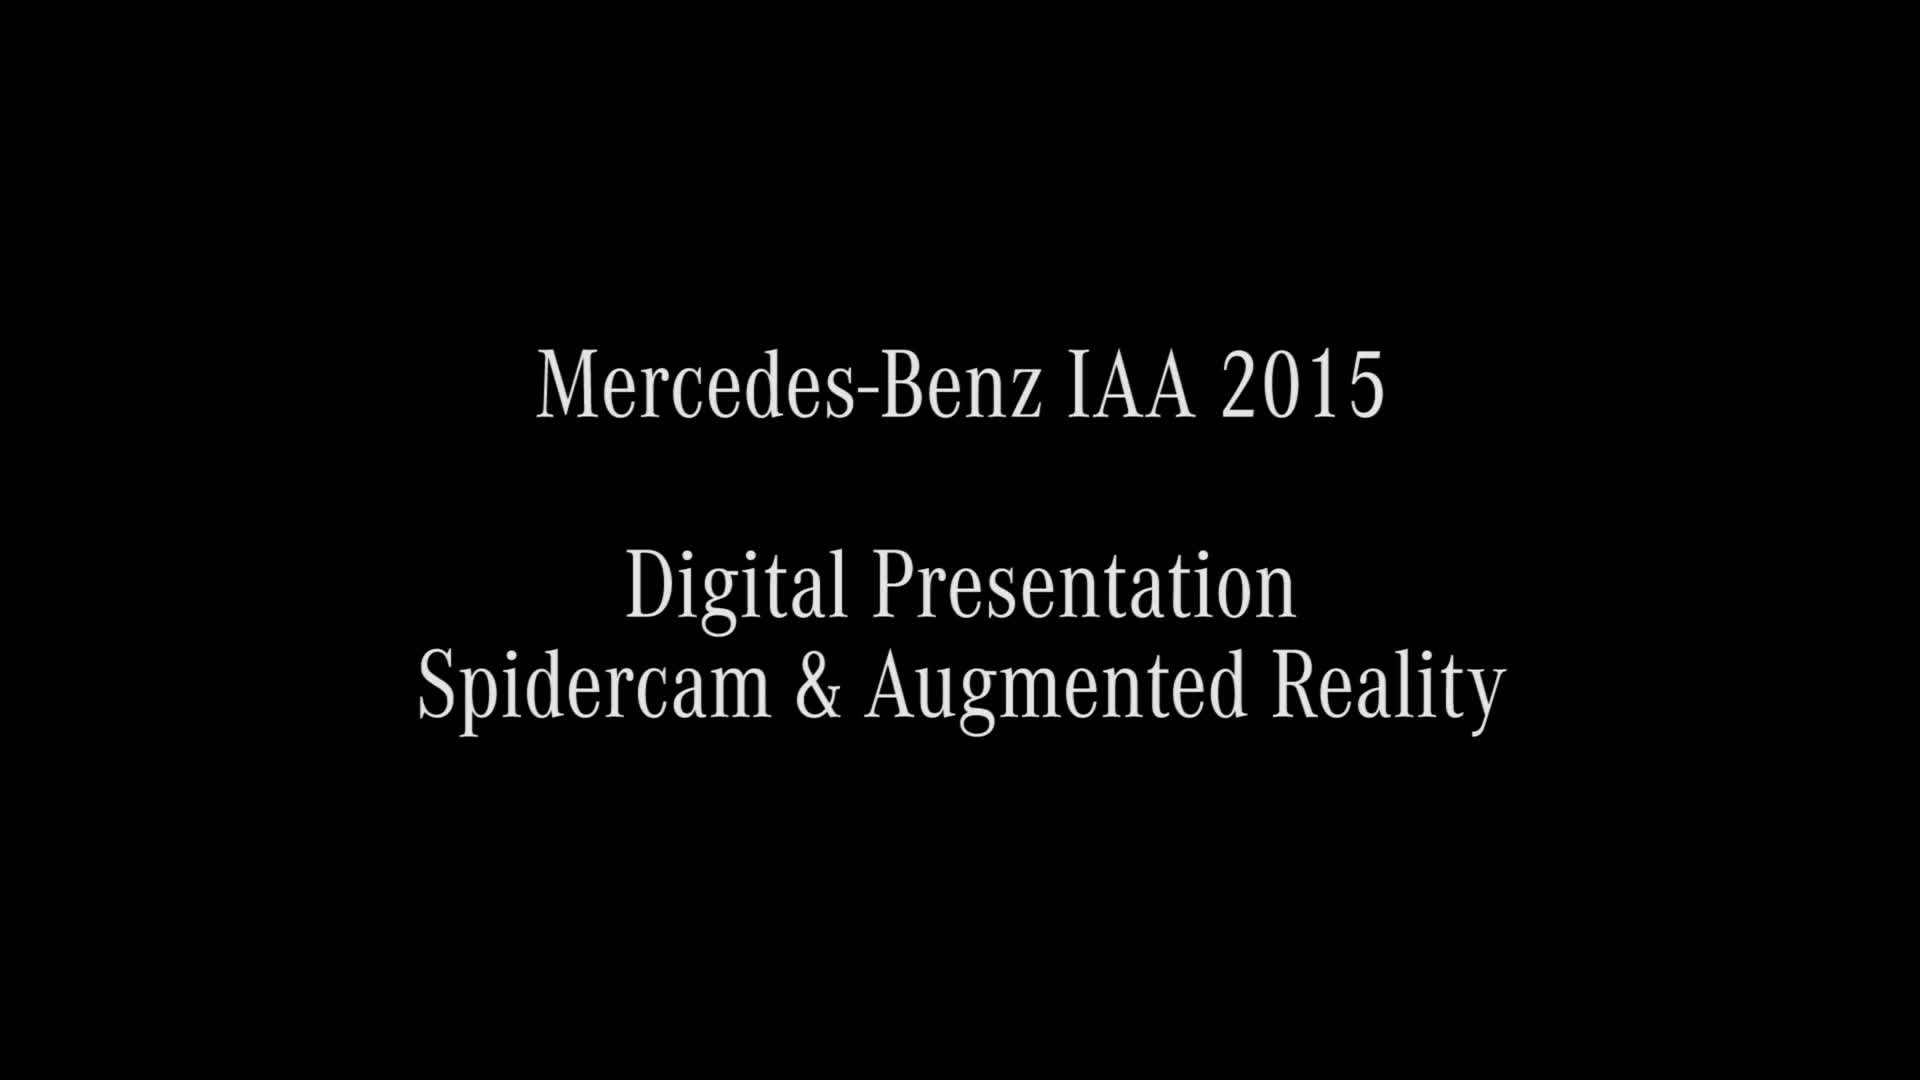 MERCEDES-BENZ IAA 2015 –  Mercedes Live! Digital presentation with spidercam/AR